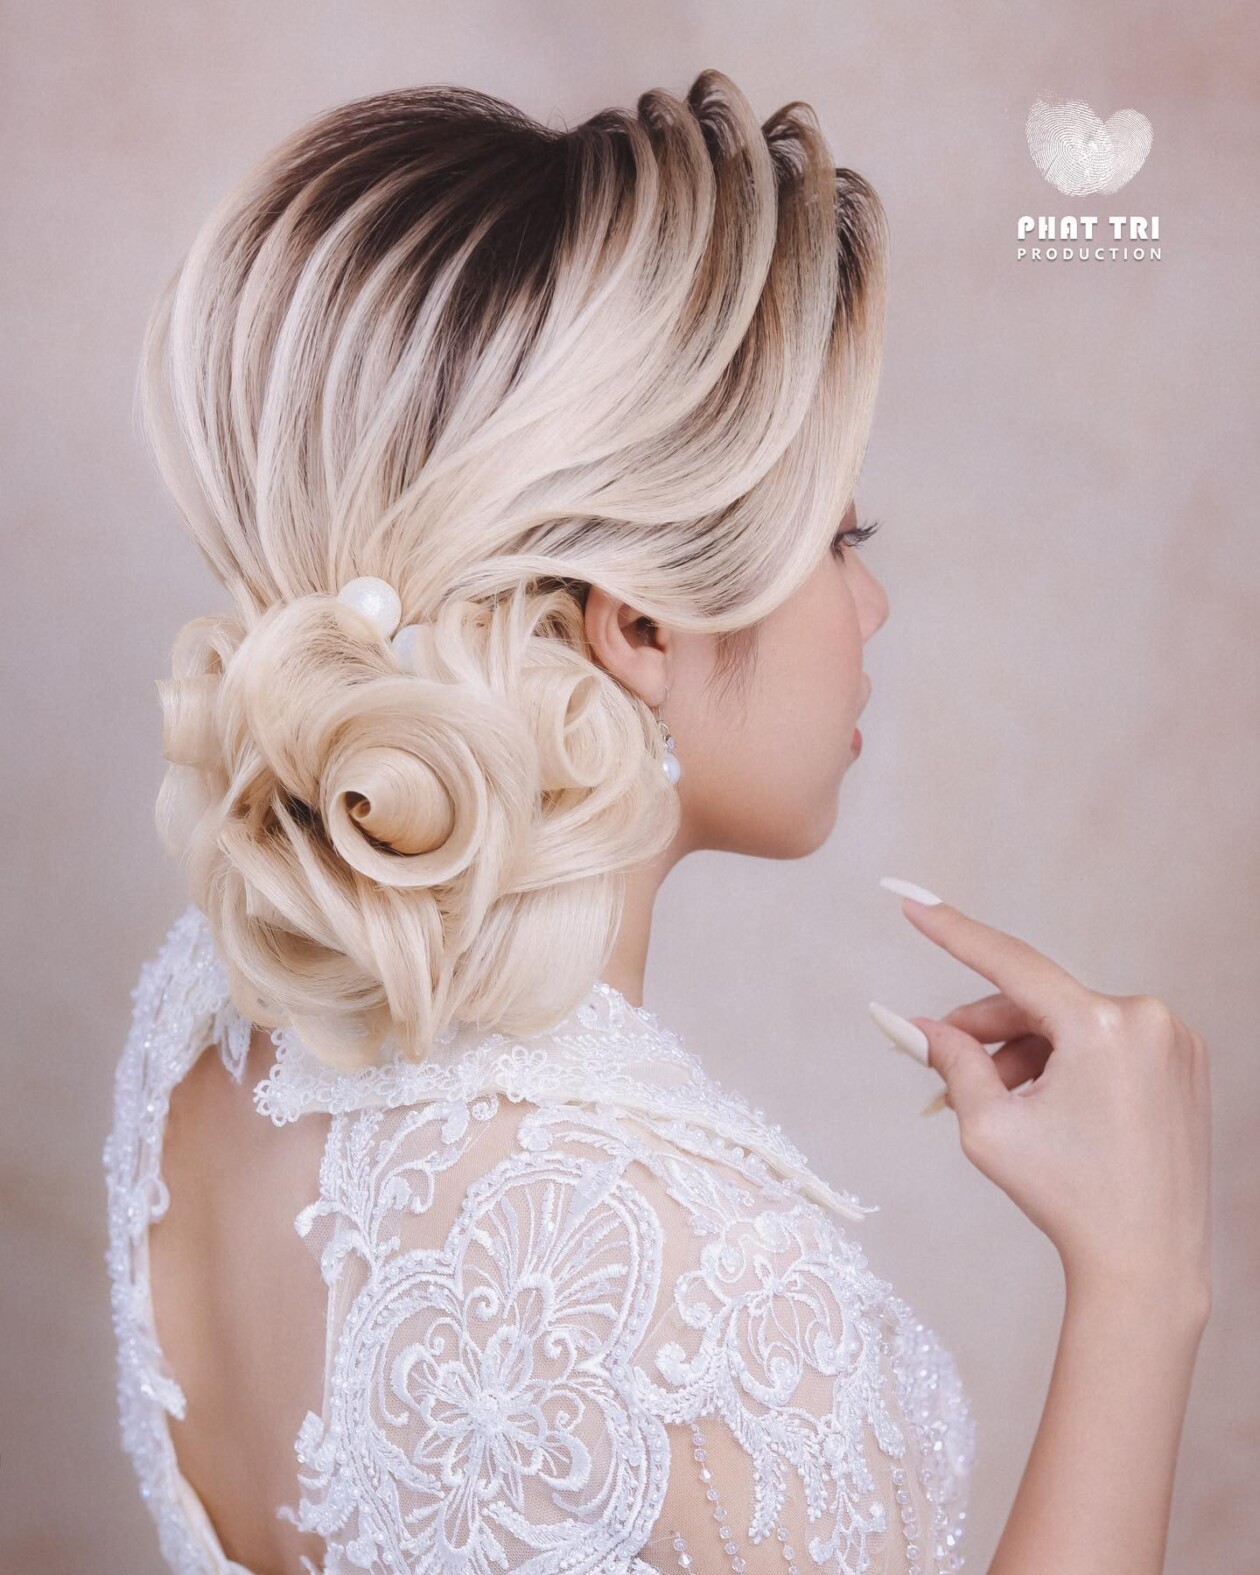 Beautiful Hairstyles That Look Like Ornate Flowers By Nguyen Phat Tri (14)